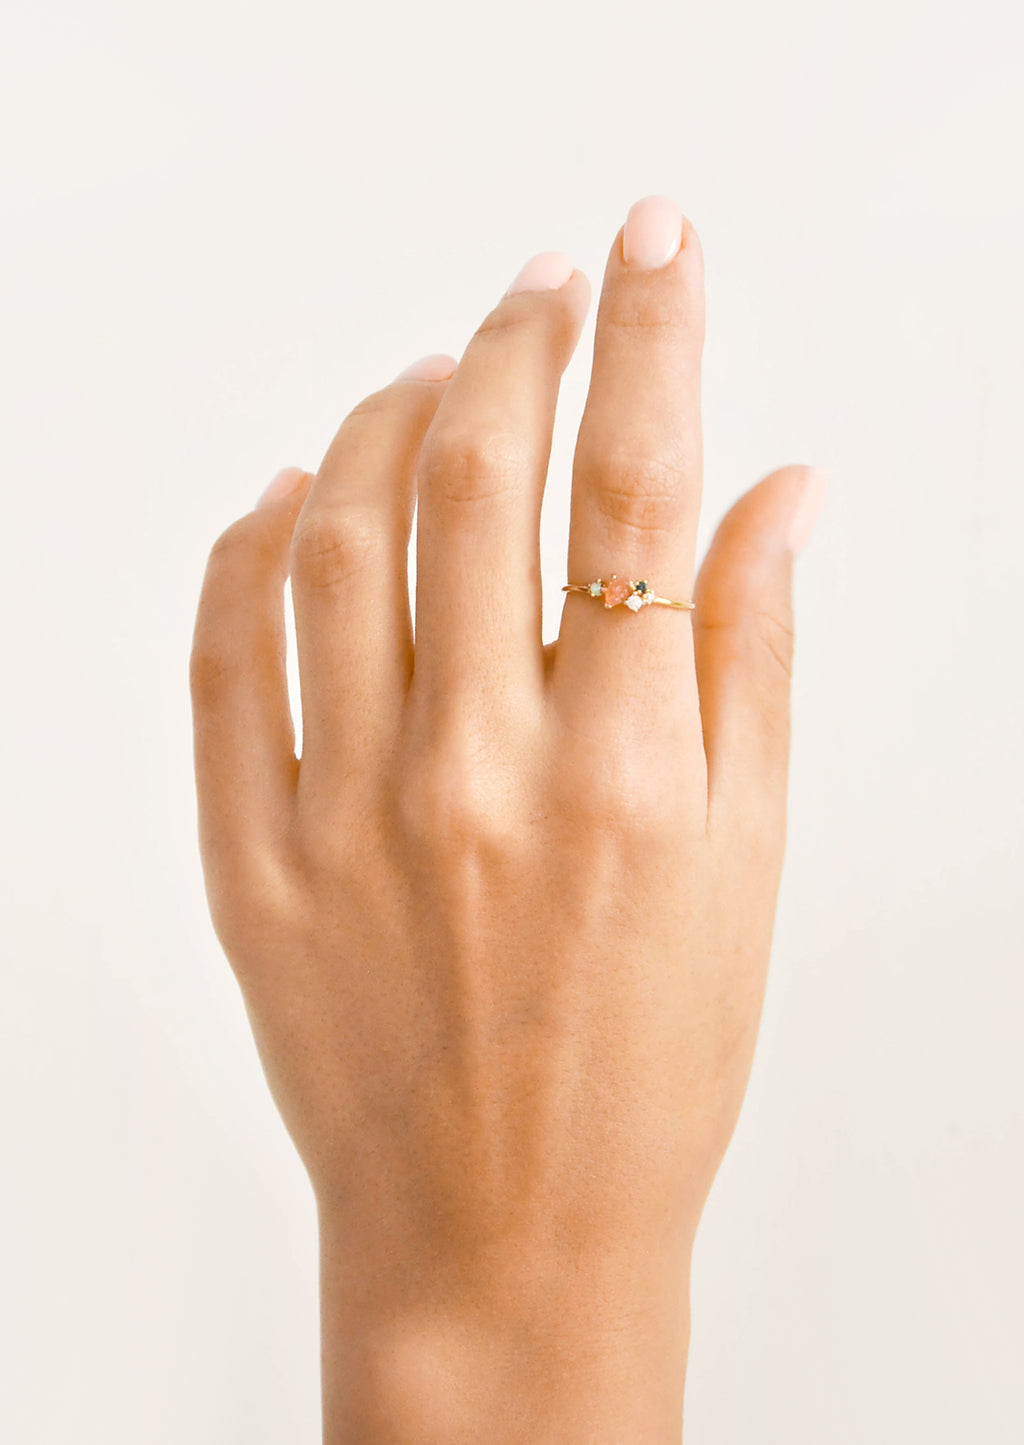 4: Model shot of hand wearing slim gold ring.